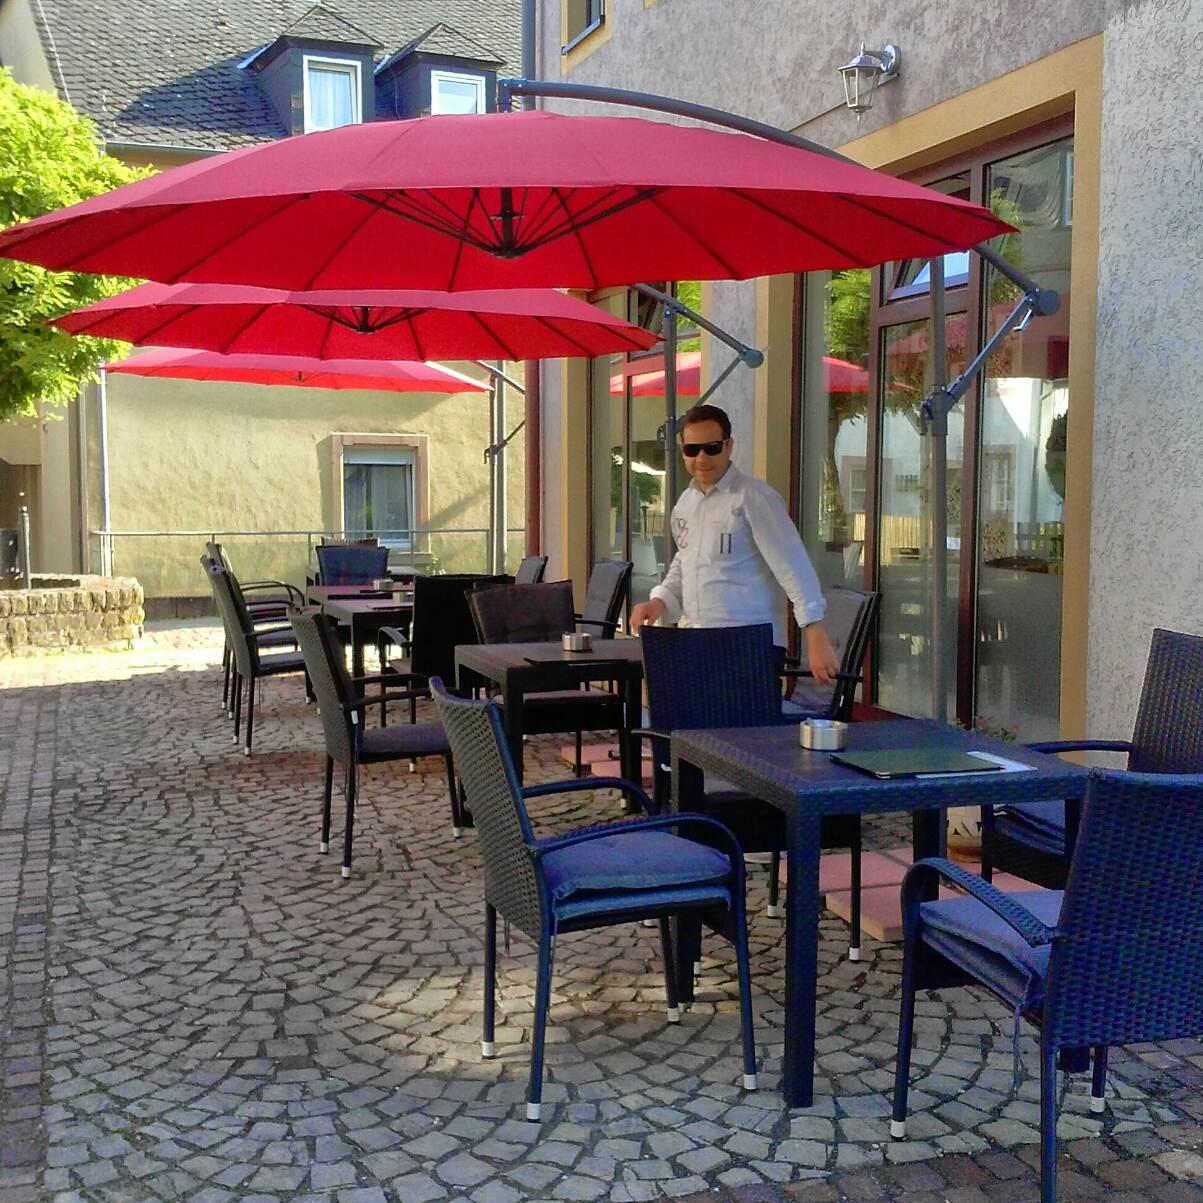 Restaurant "Miso caffee" in  Bitburg